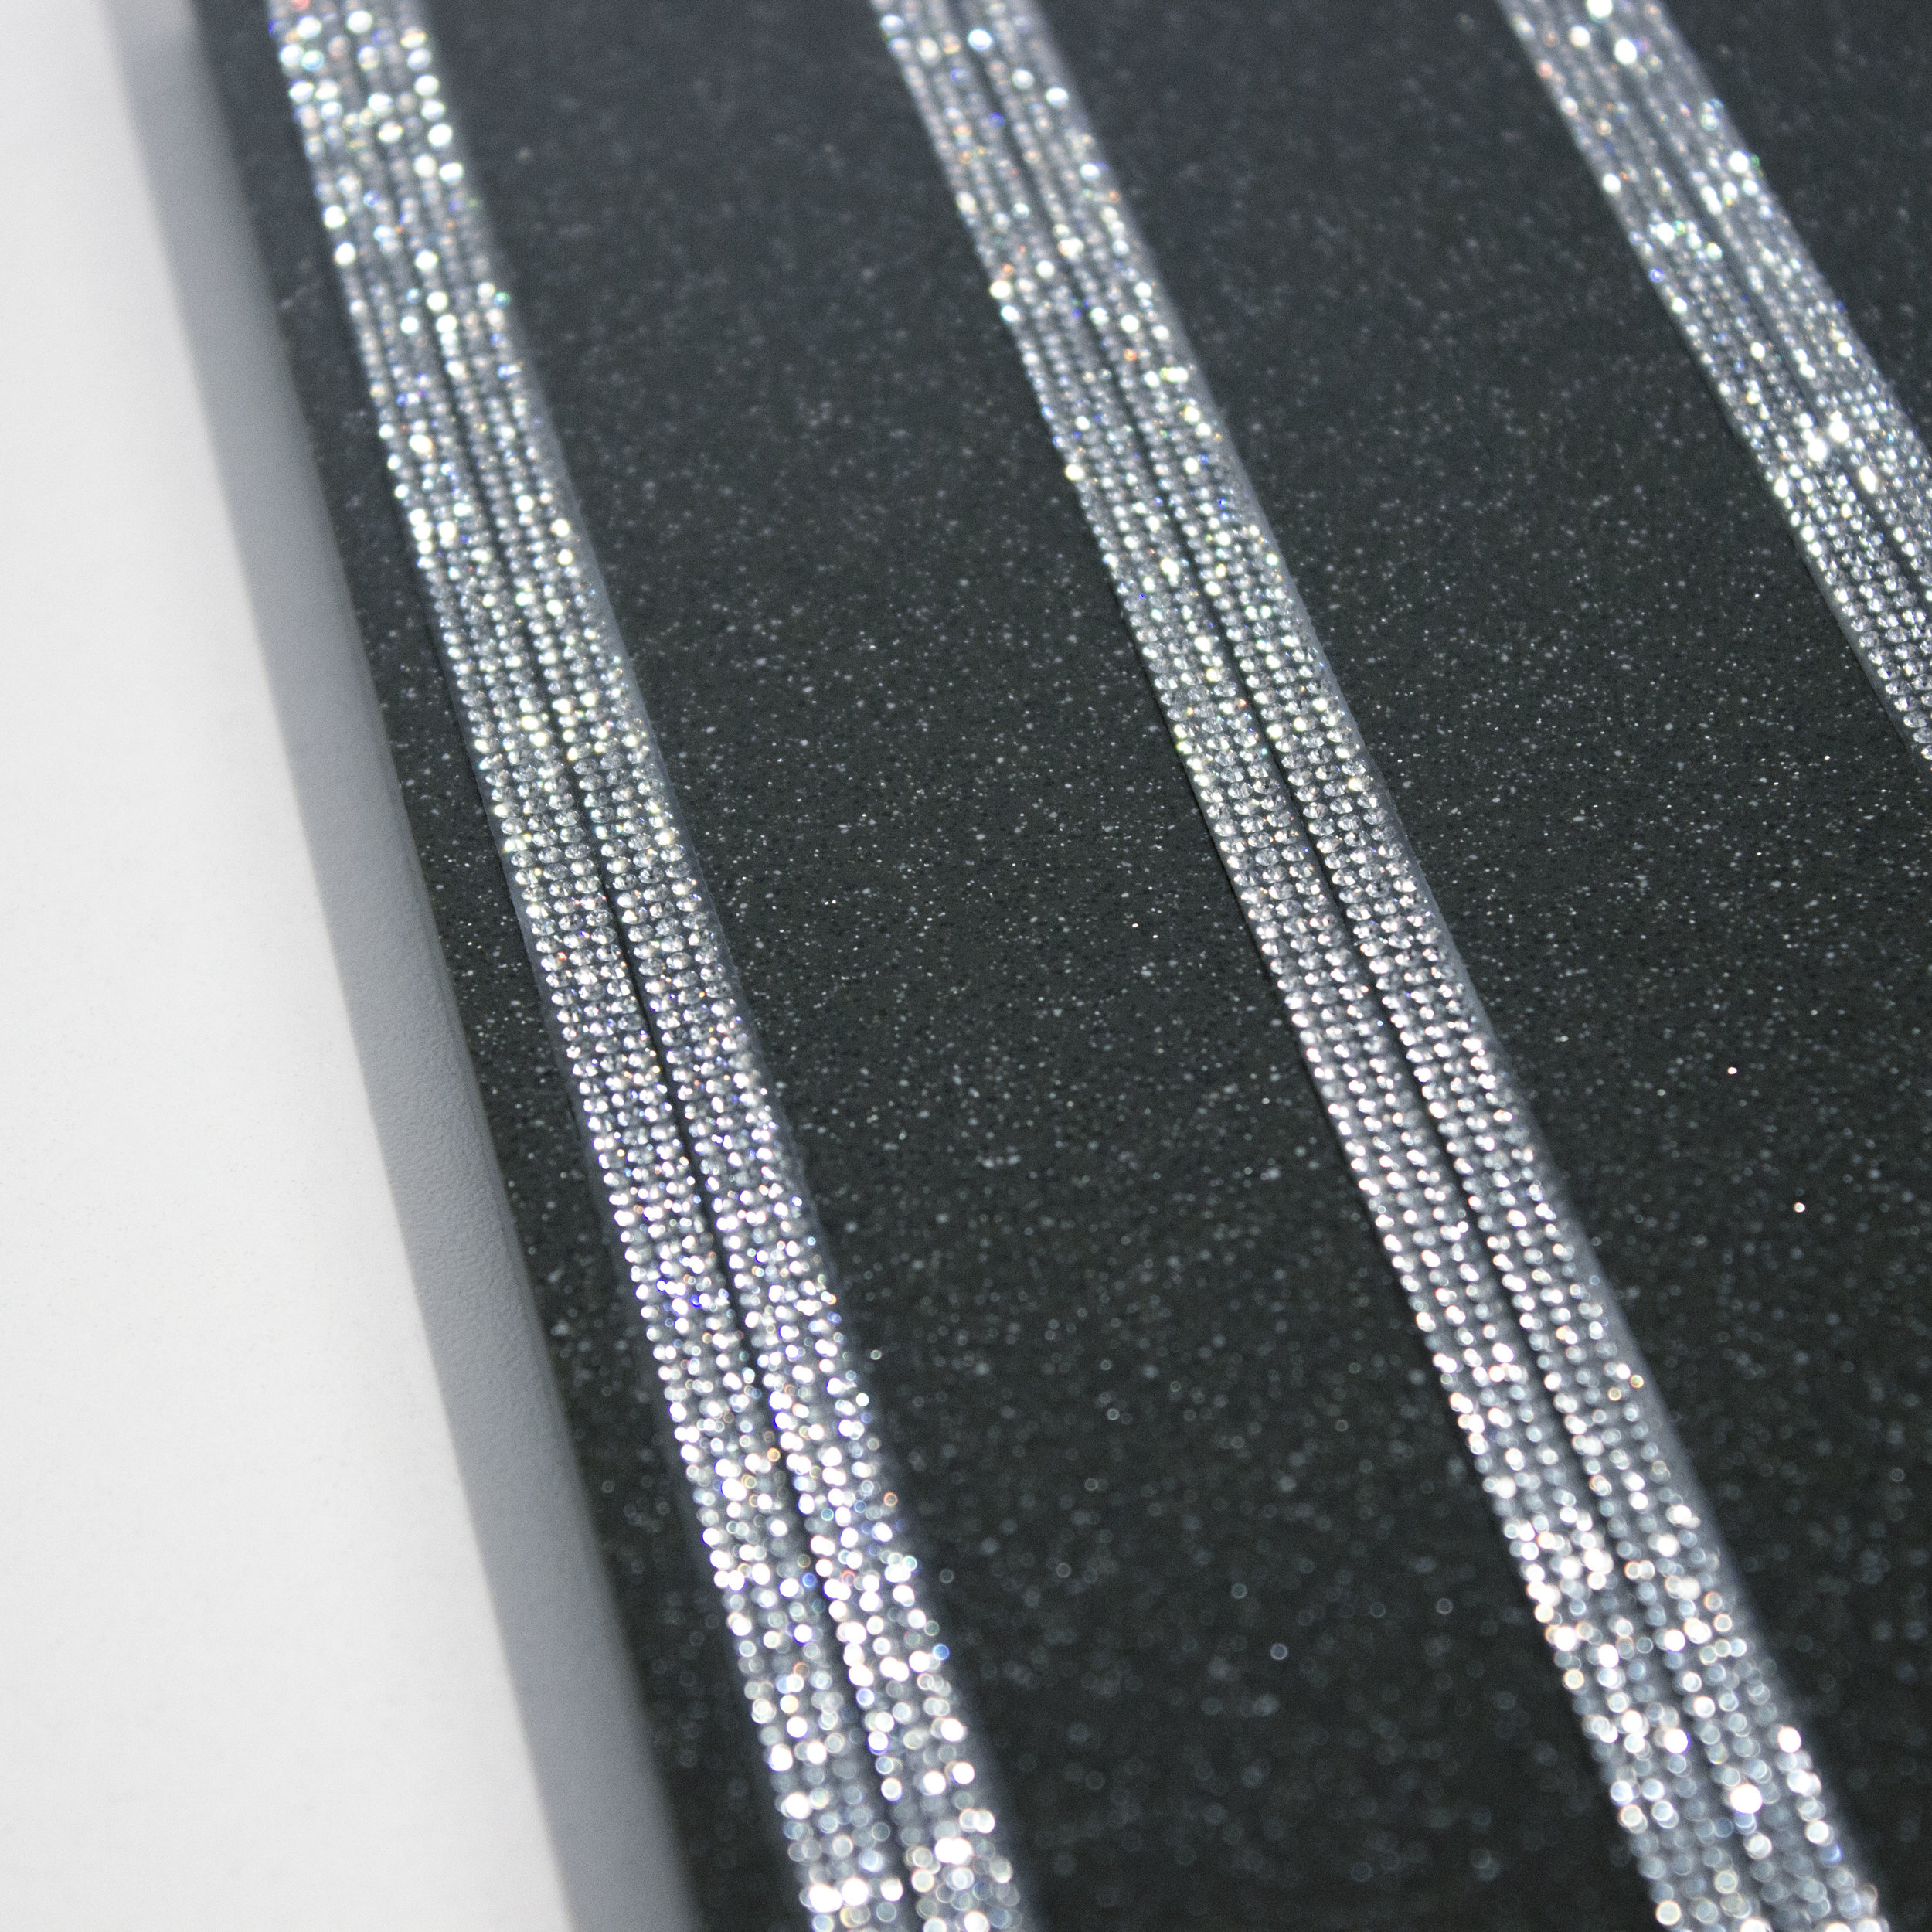 3 Crystal Bandings on Solid Surface.JPG